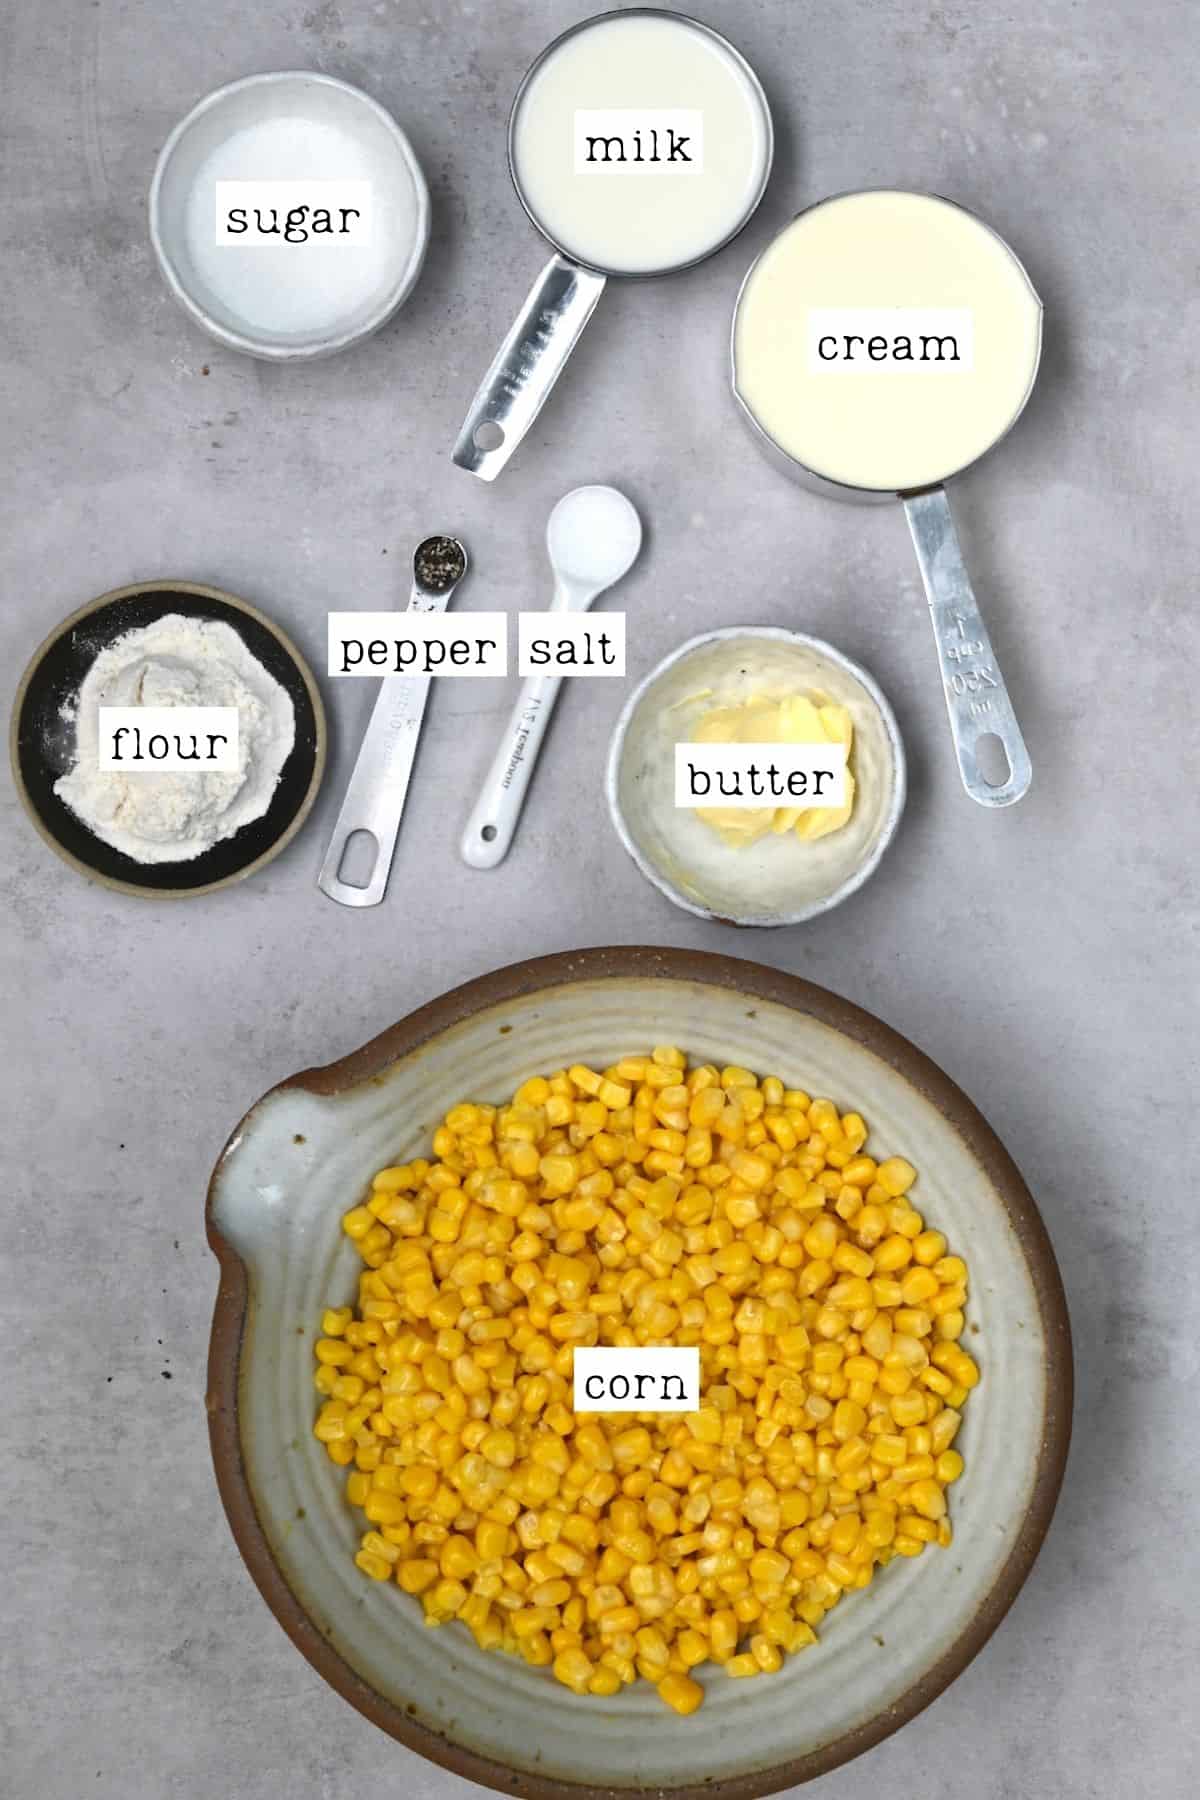 Ingredients for corned cream